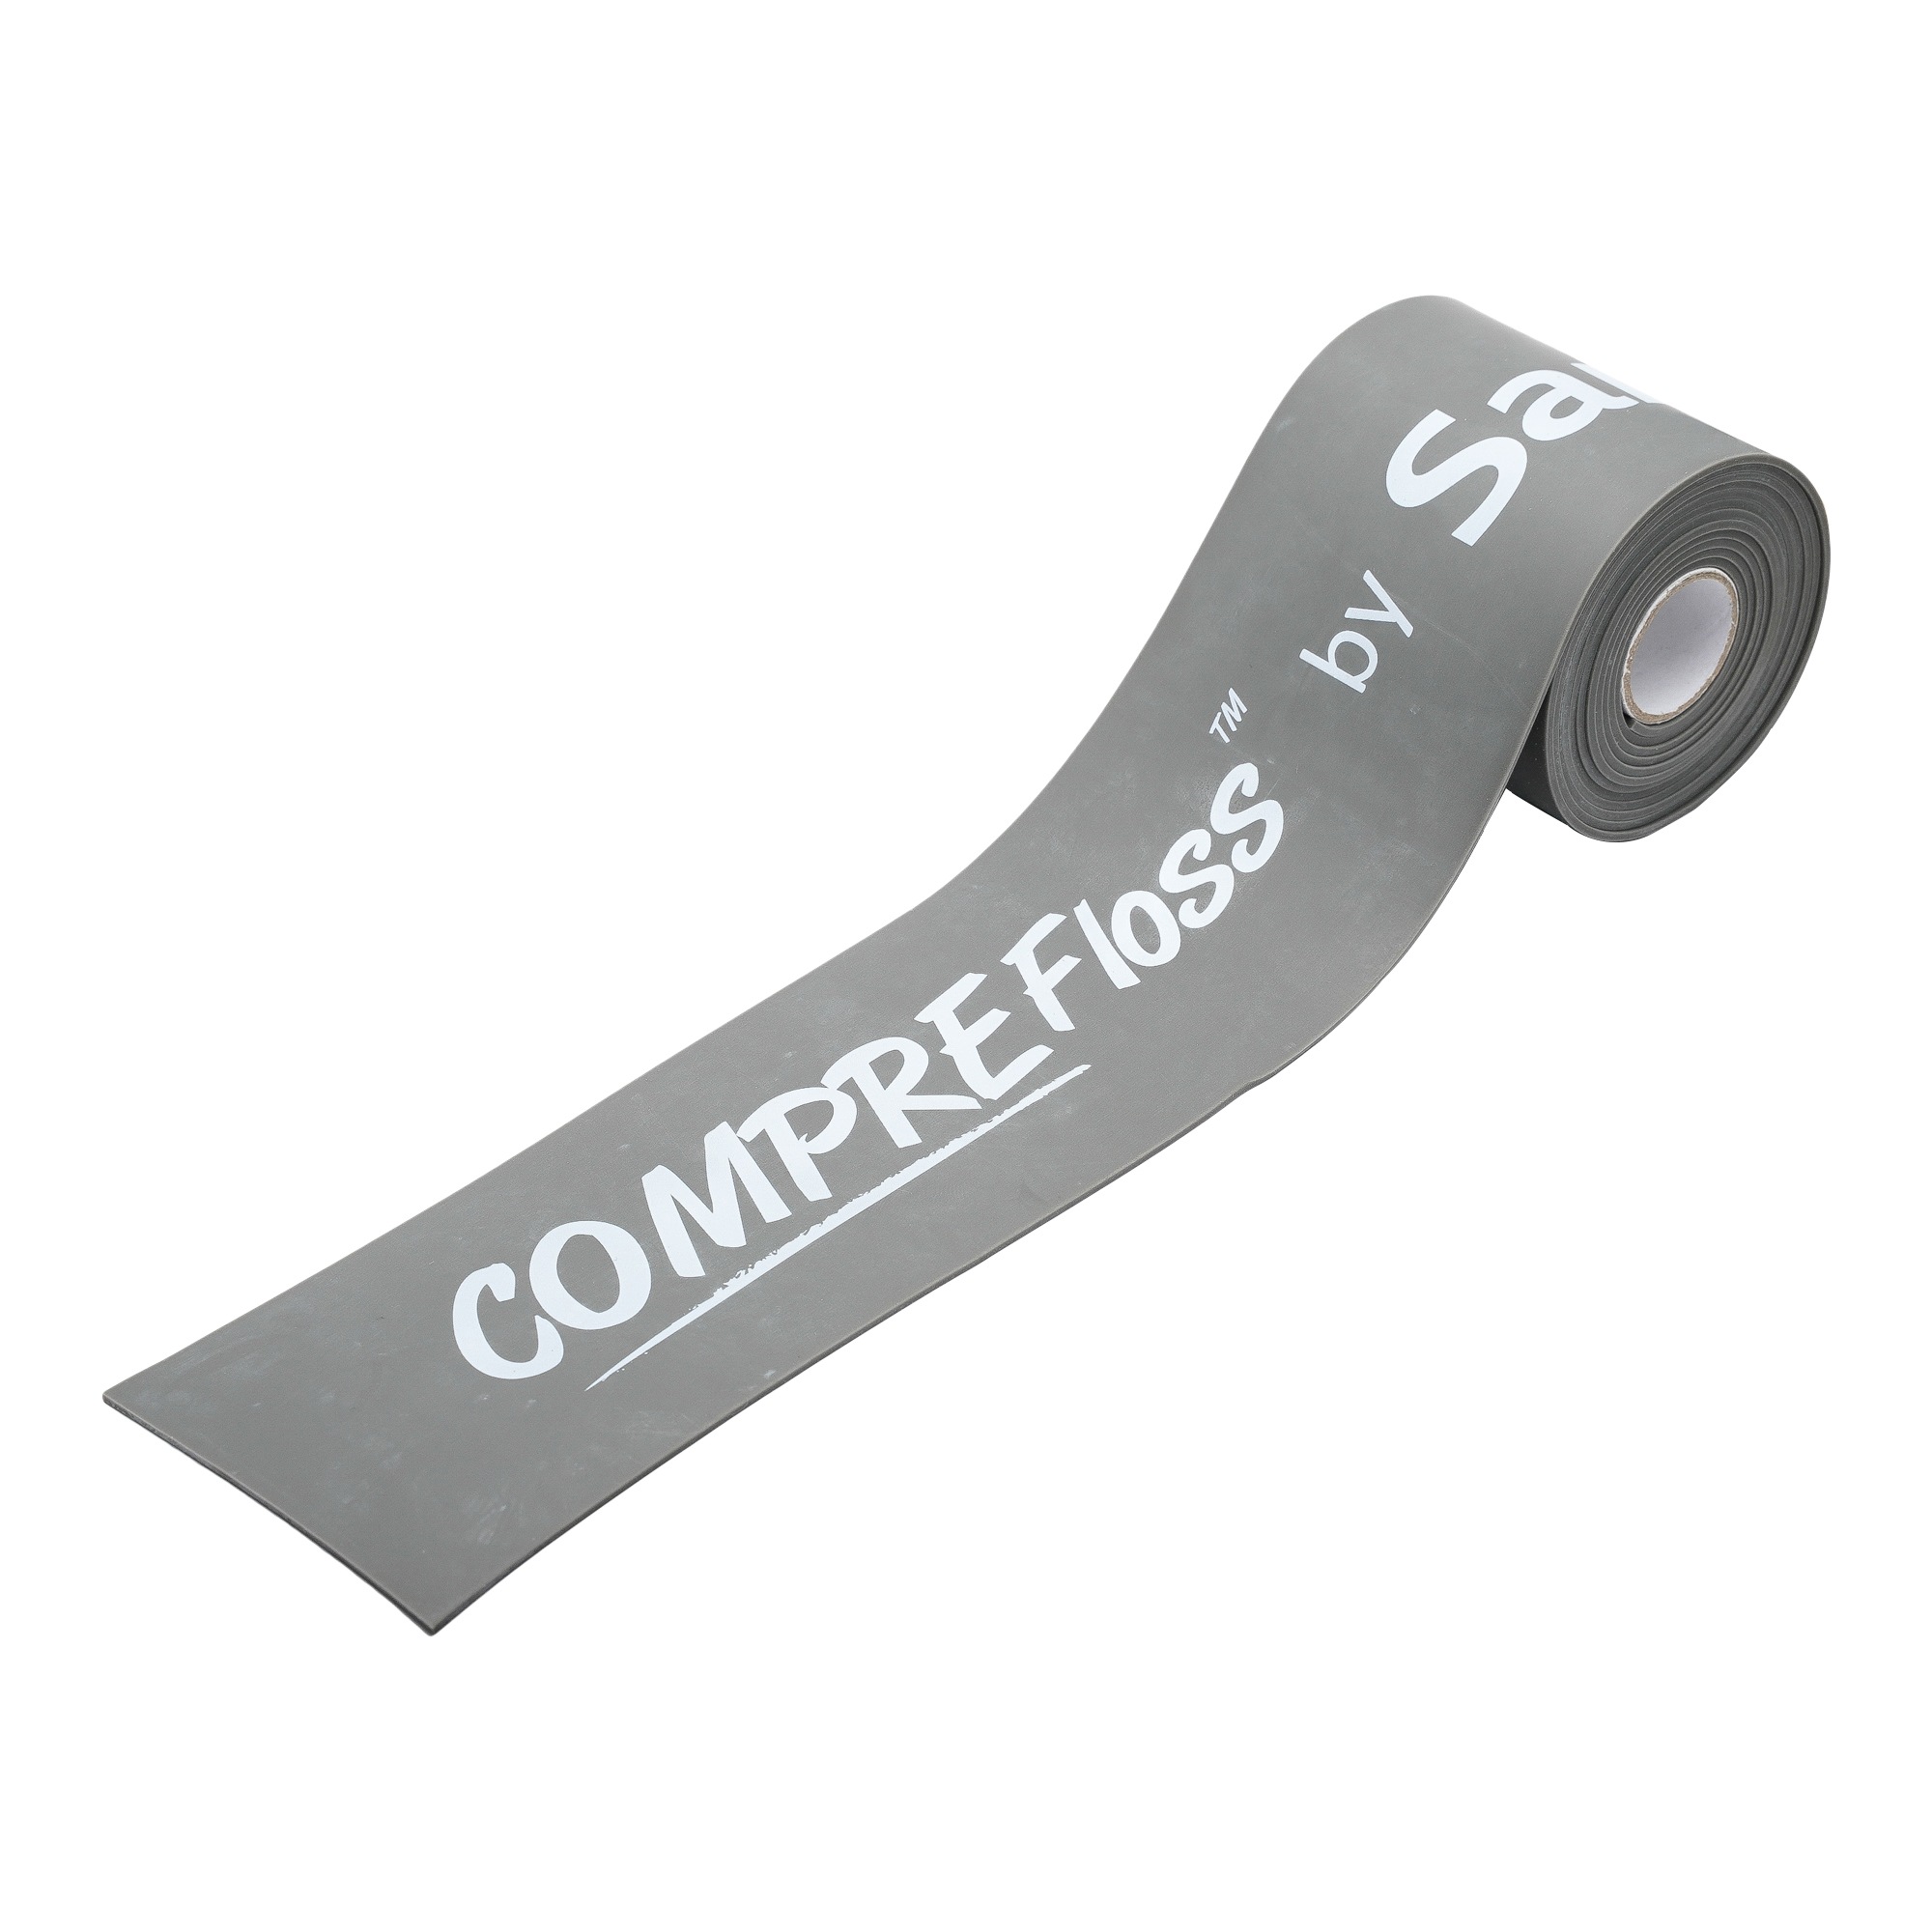 Sanctband Comprefloss Flossband extra breit 7,5cm und extra lang 3,5m Grau grey